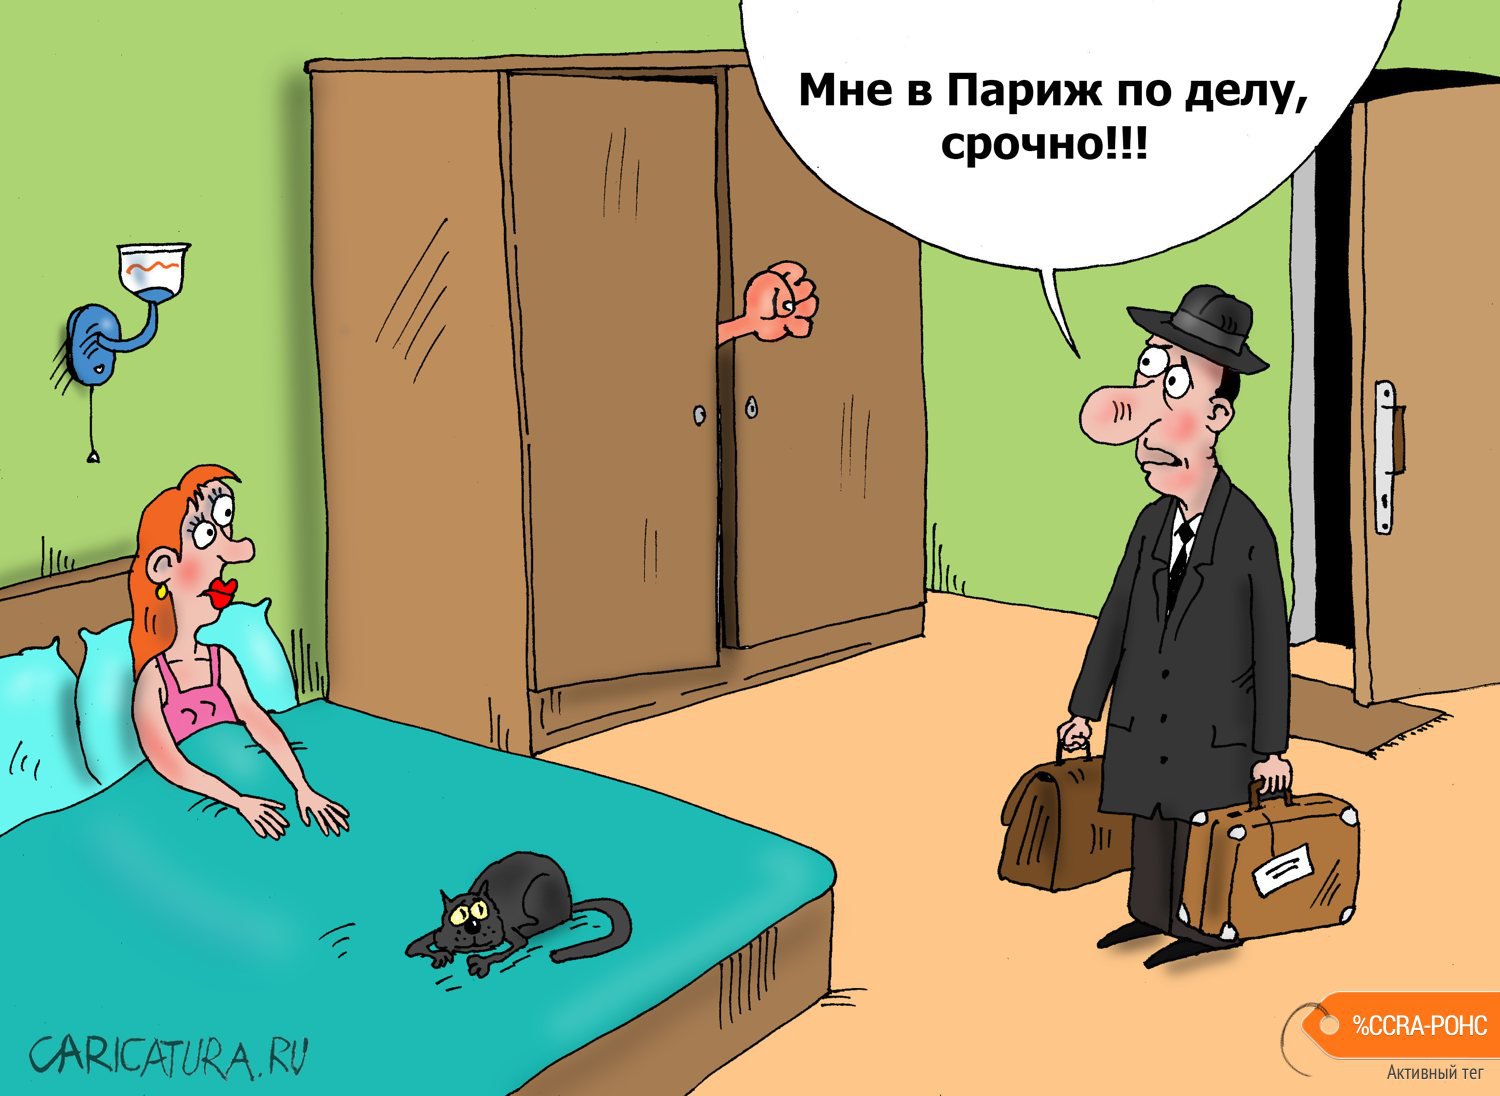 Карикатура "Жизнь - езда!", Валерий Тарасенко